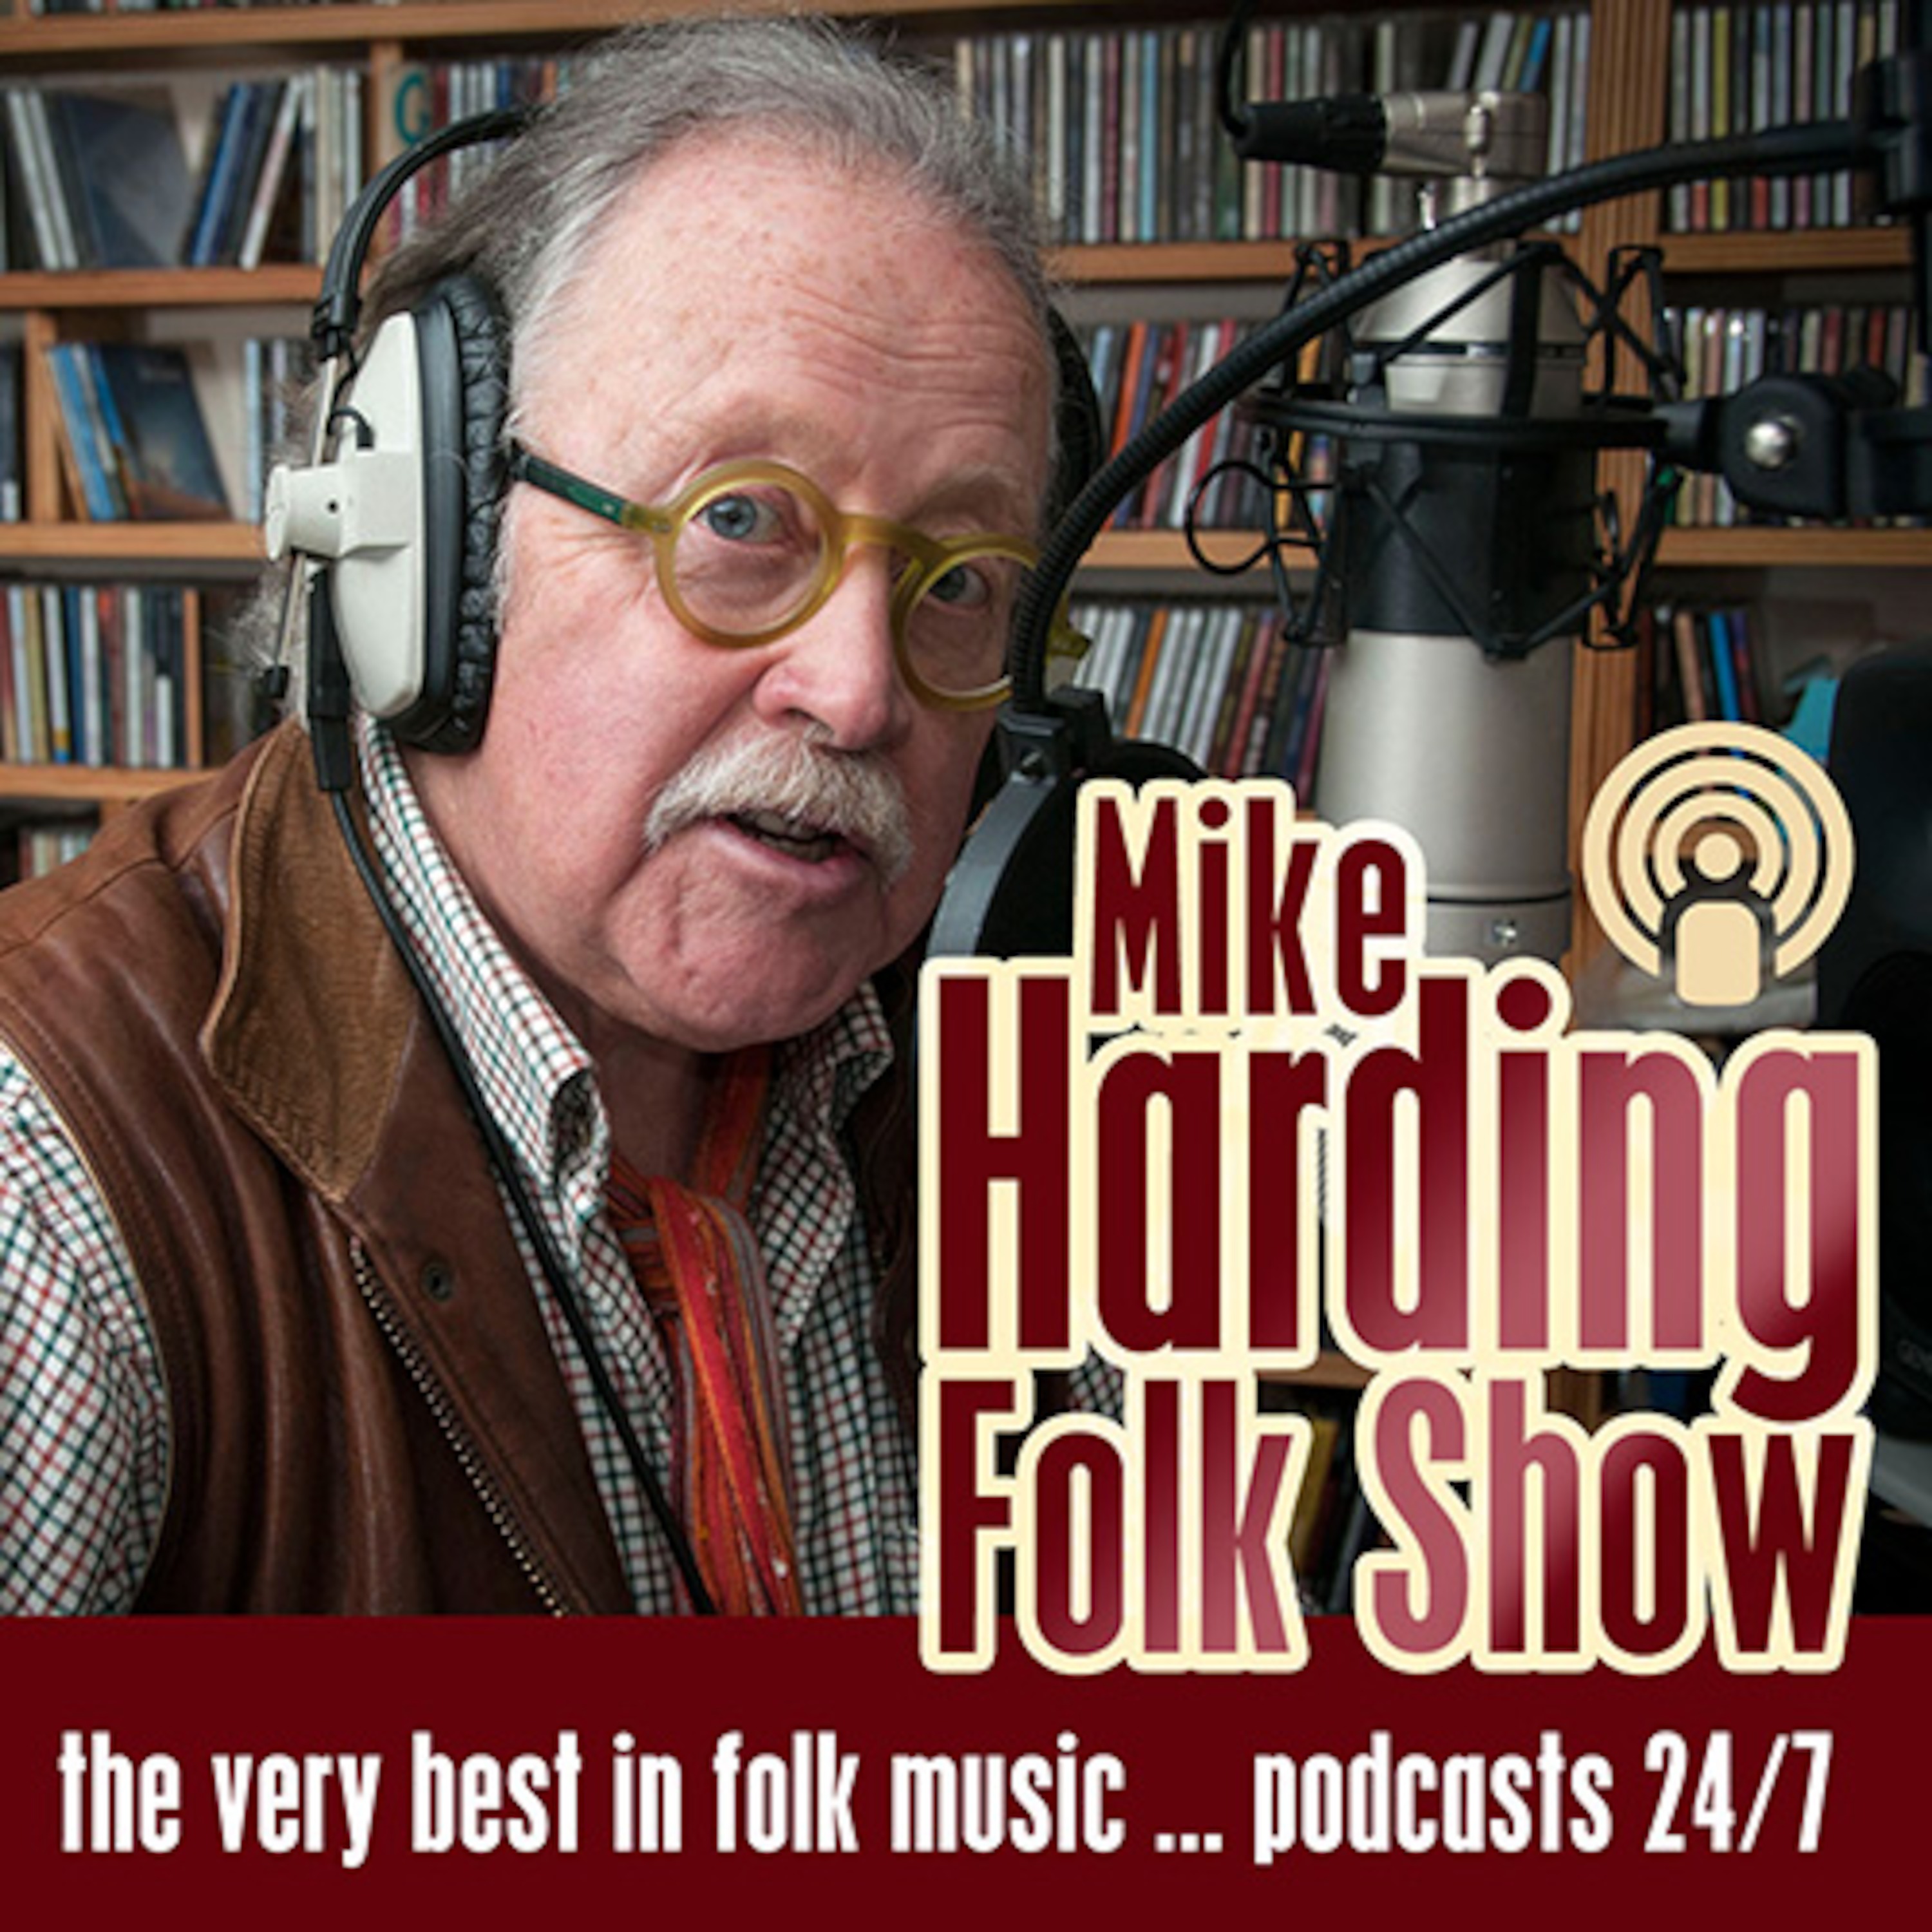 Mike Harding Folk Show 203